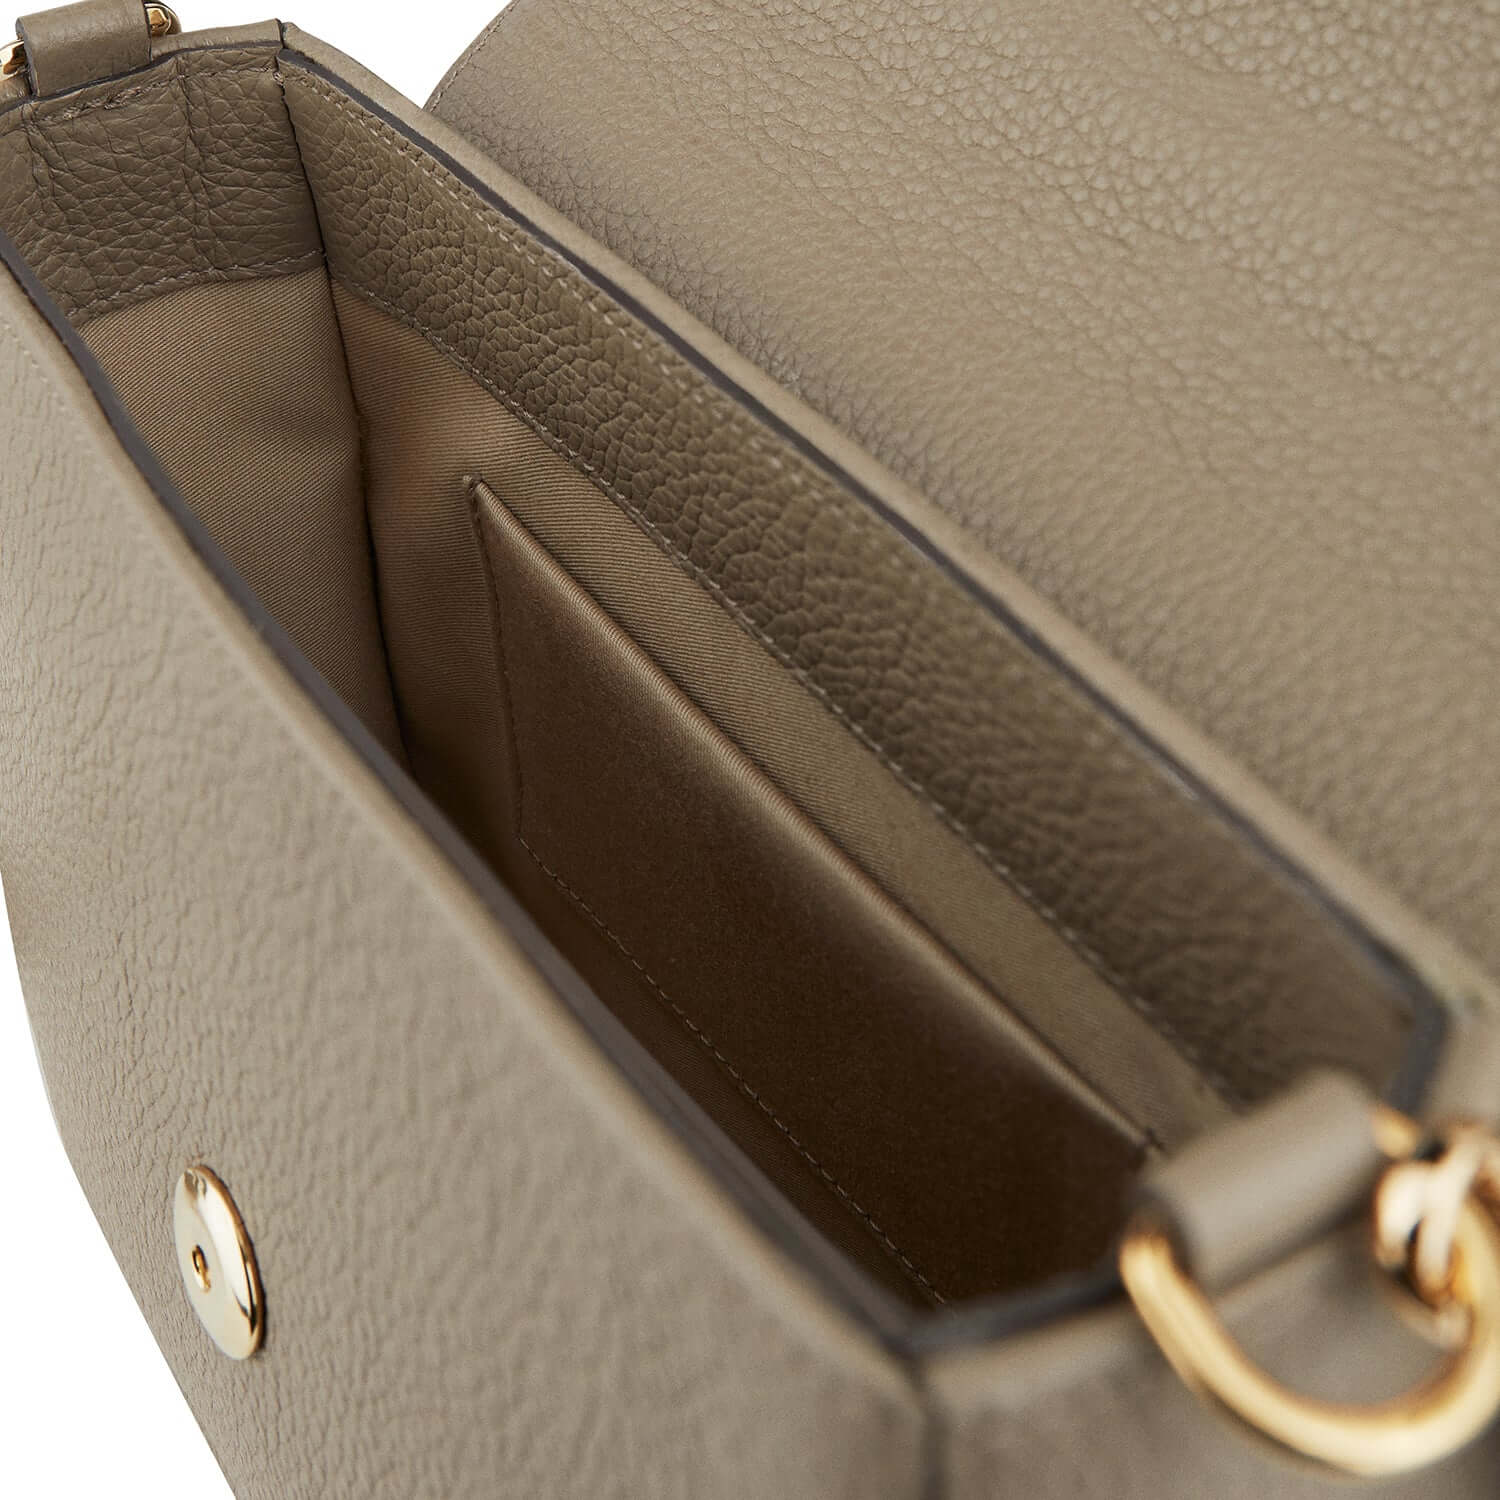 interior handbag nude lining cotton simplistic hardware and card pocket